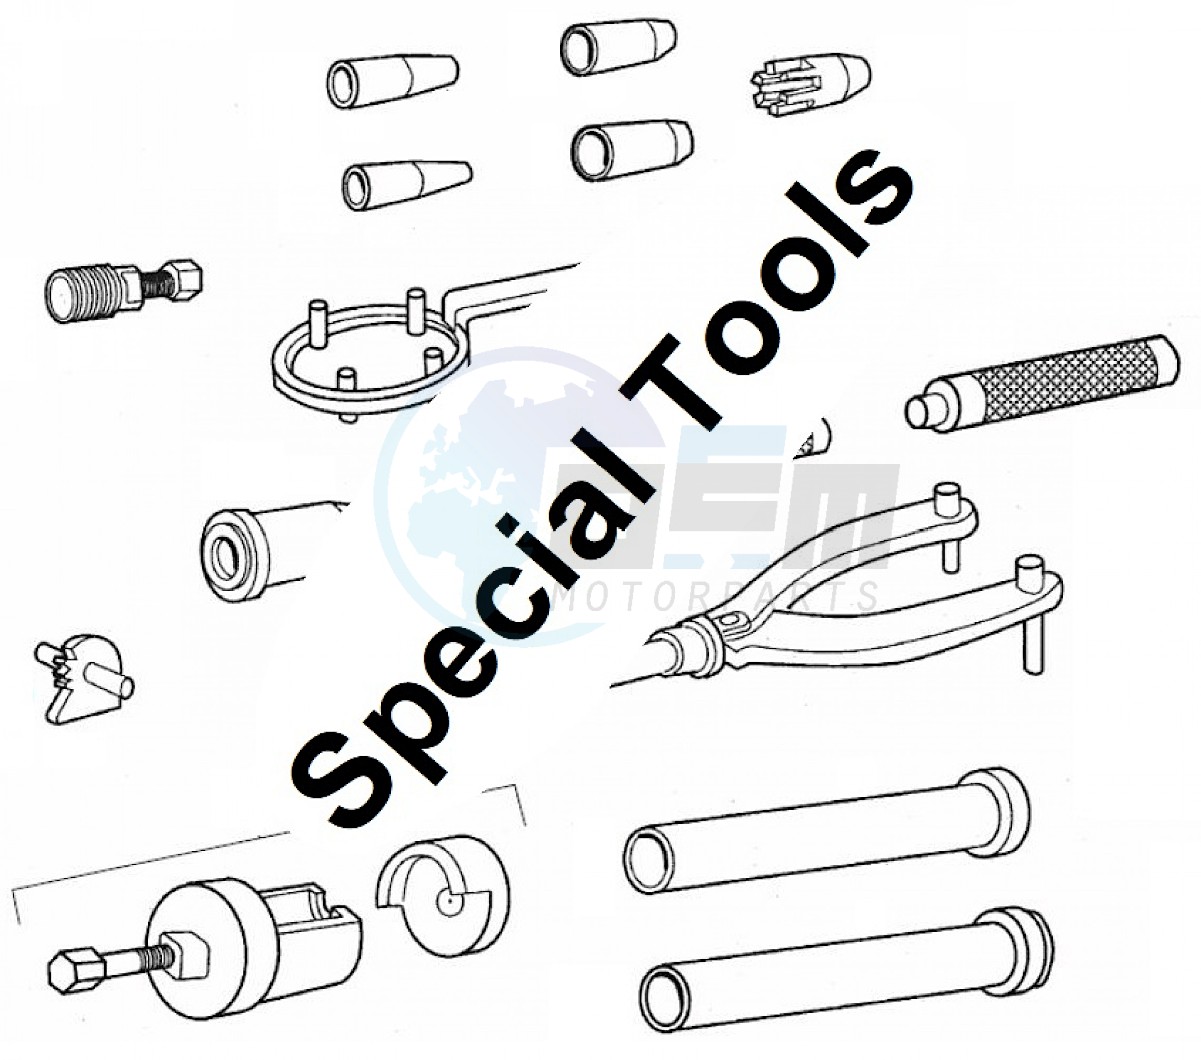 Special tools (Positions) blueprint